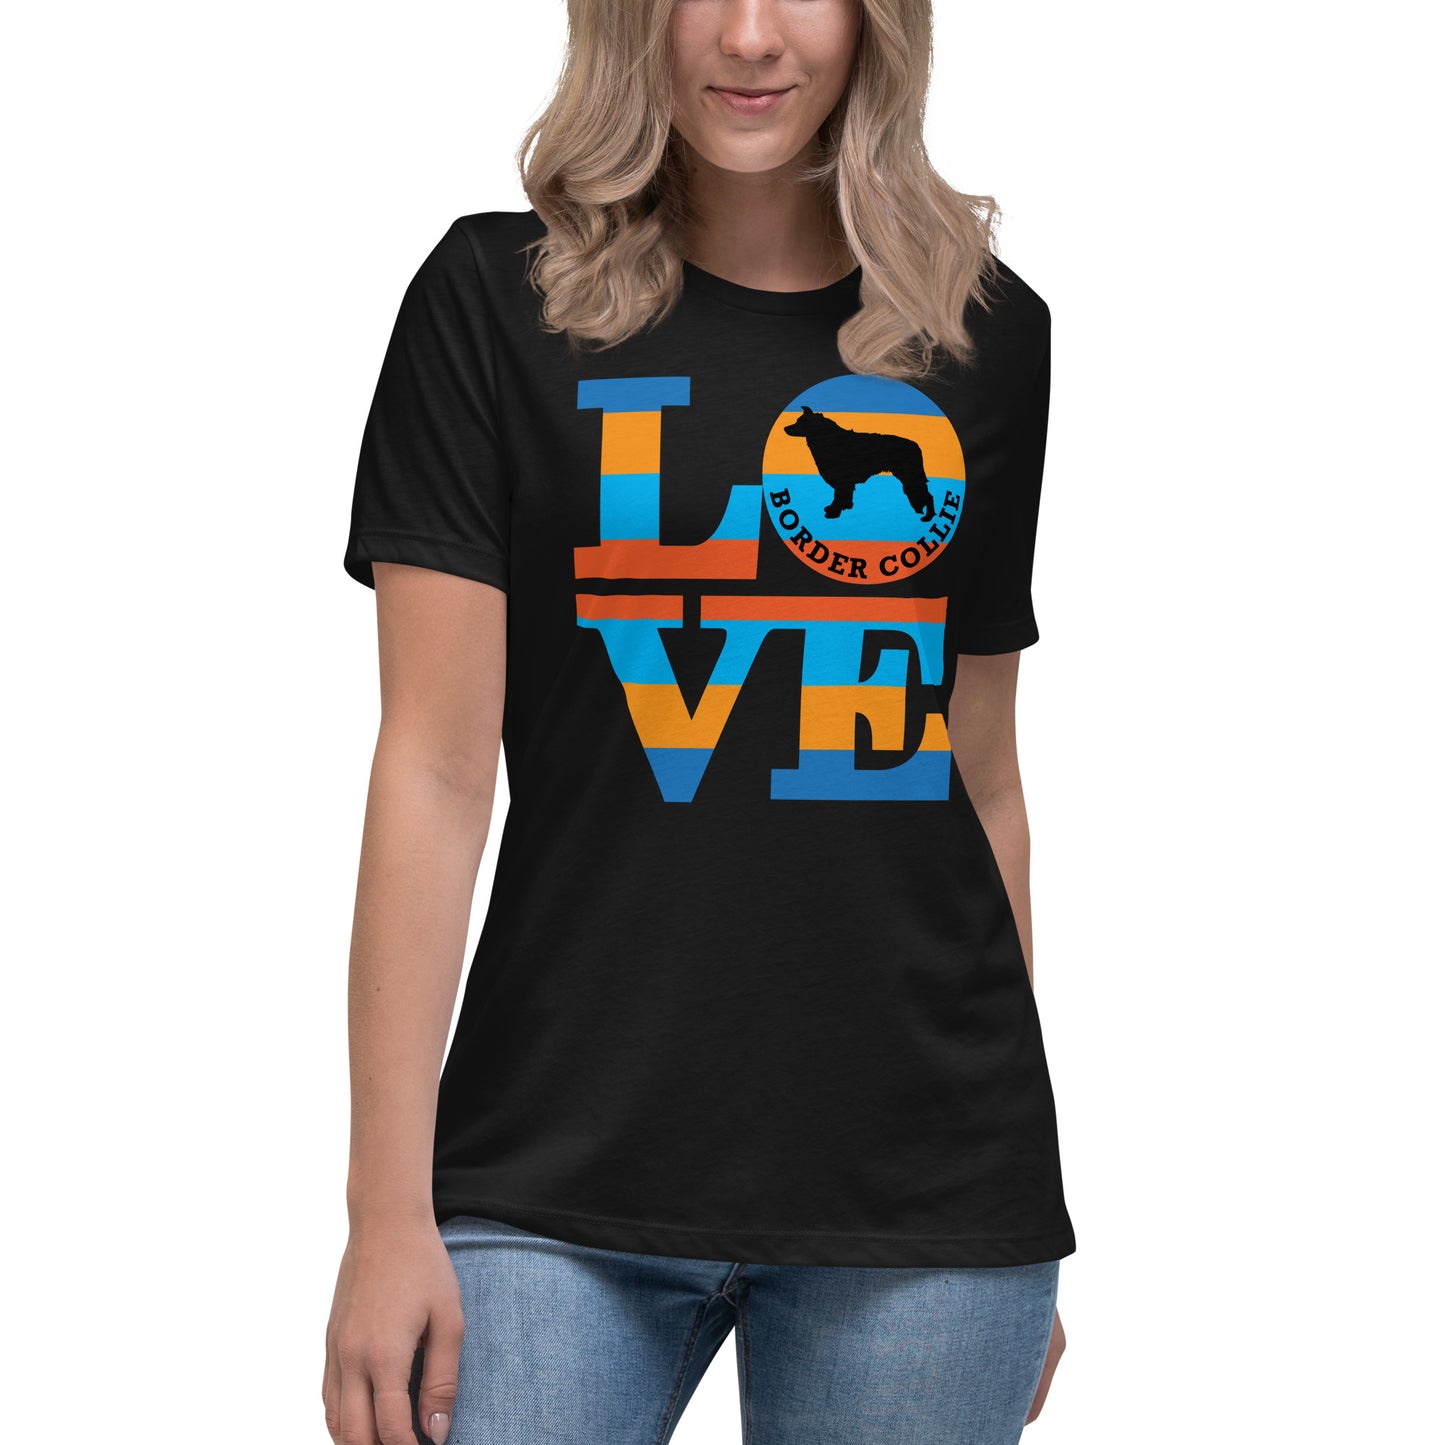 Border Collie Love women’s black t-shirt by Dog Artistry.